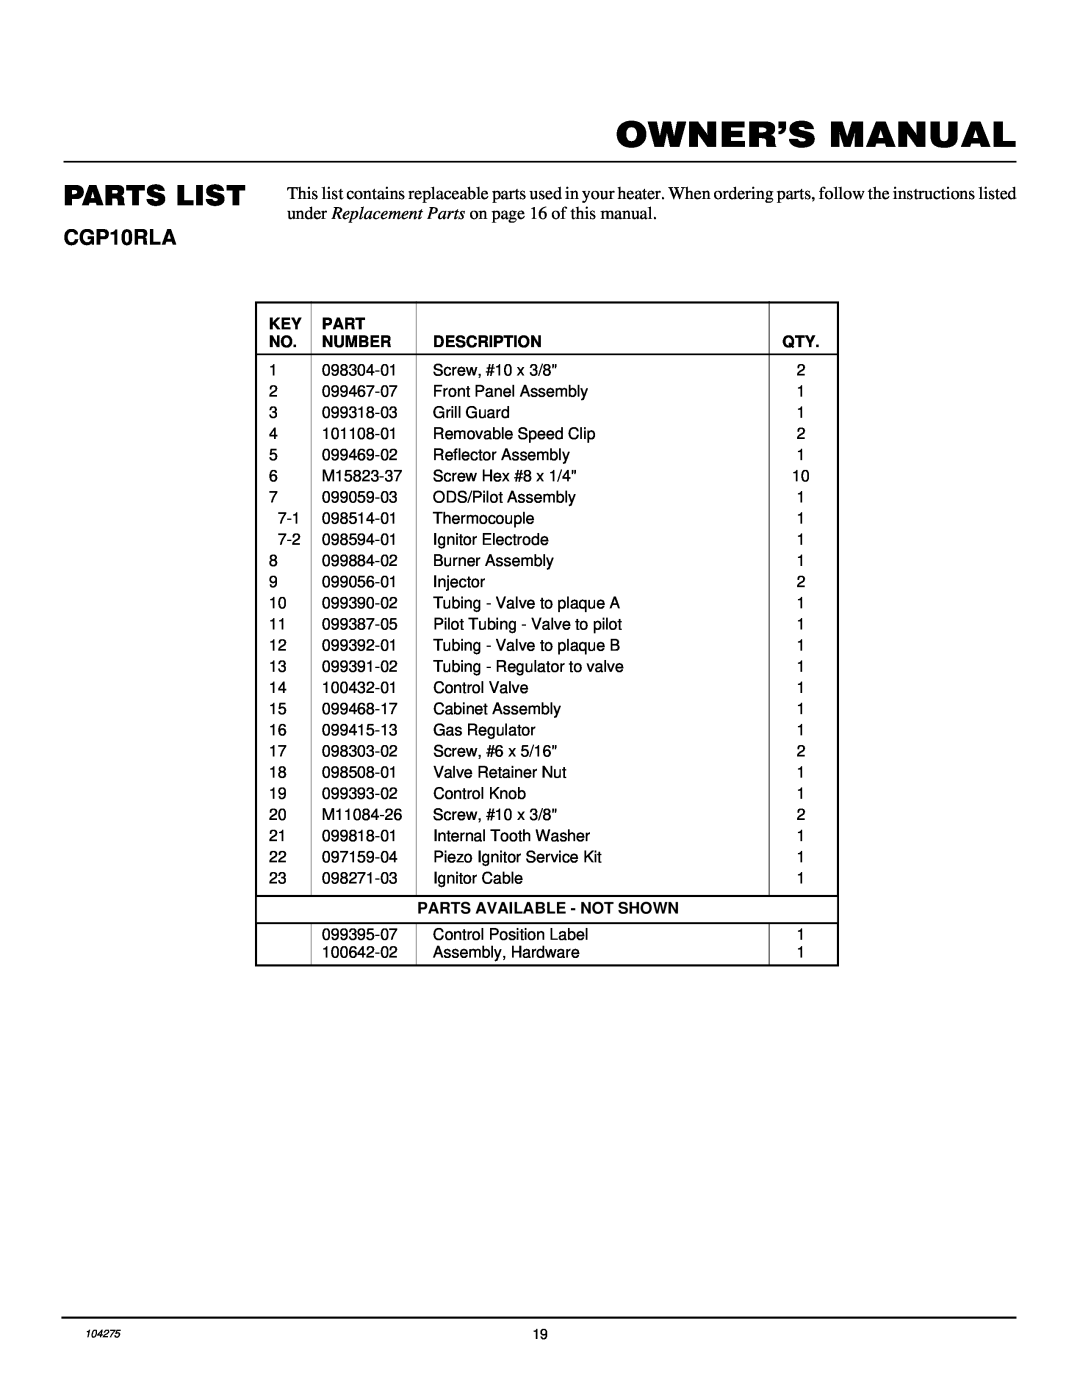 Desa CGP10RLA installation manual Parts List, Number, Description, Parts Available - Not Shown 